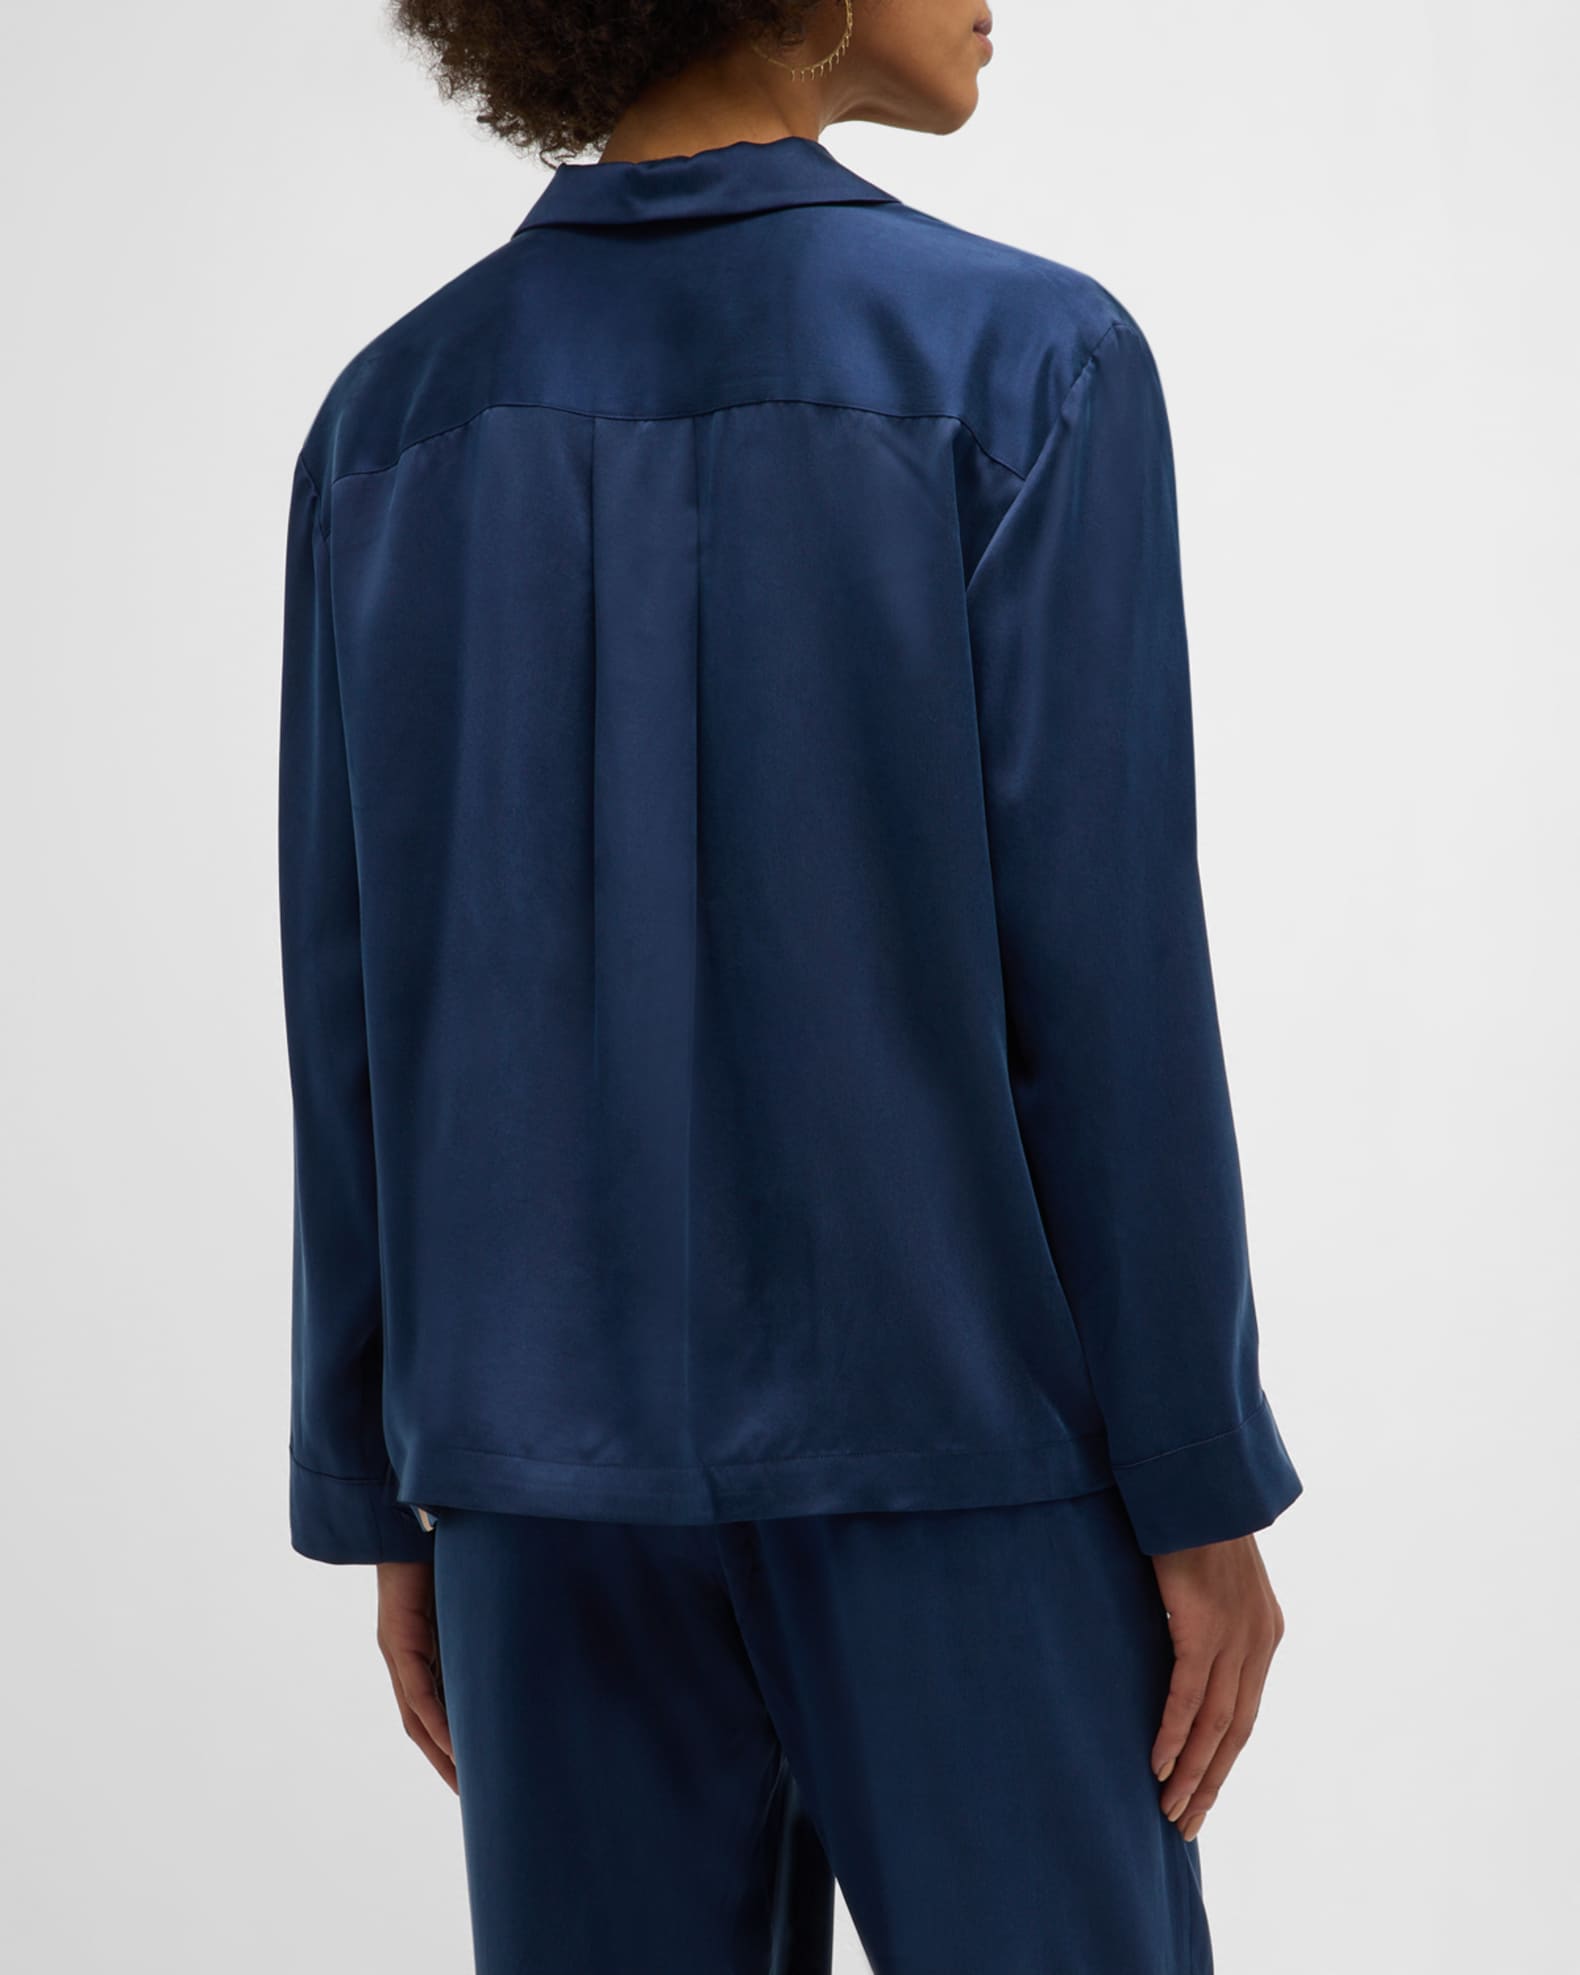 Lunya Women's Washable Silk High Rise Pant Set - Deep Blue, All Apparel